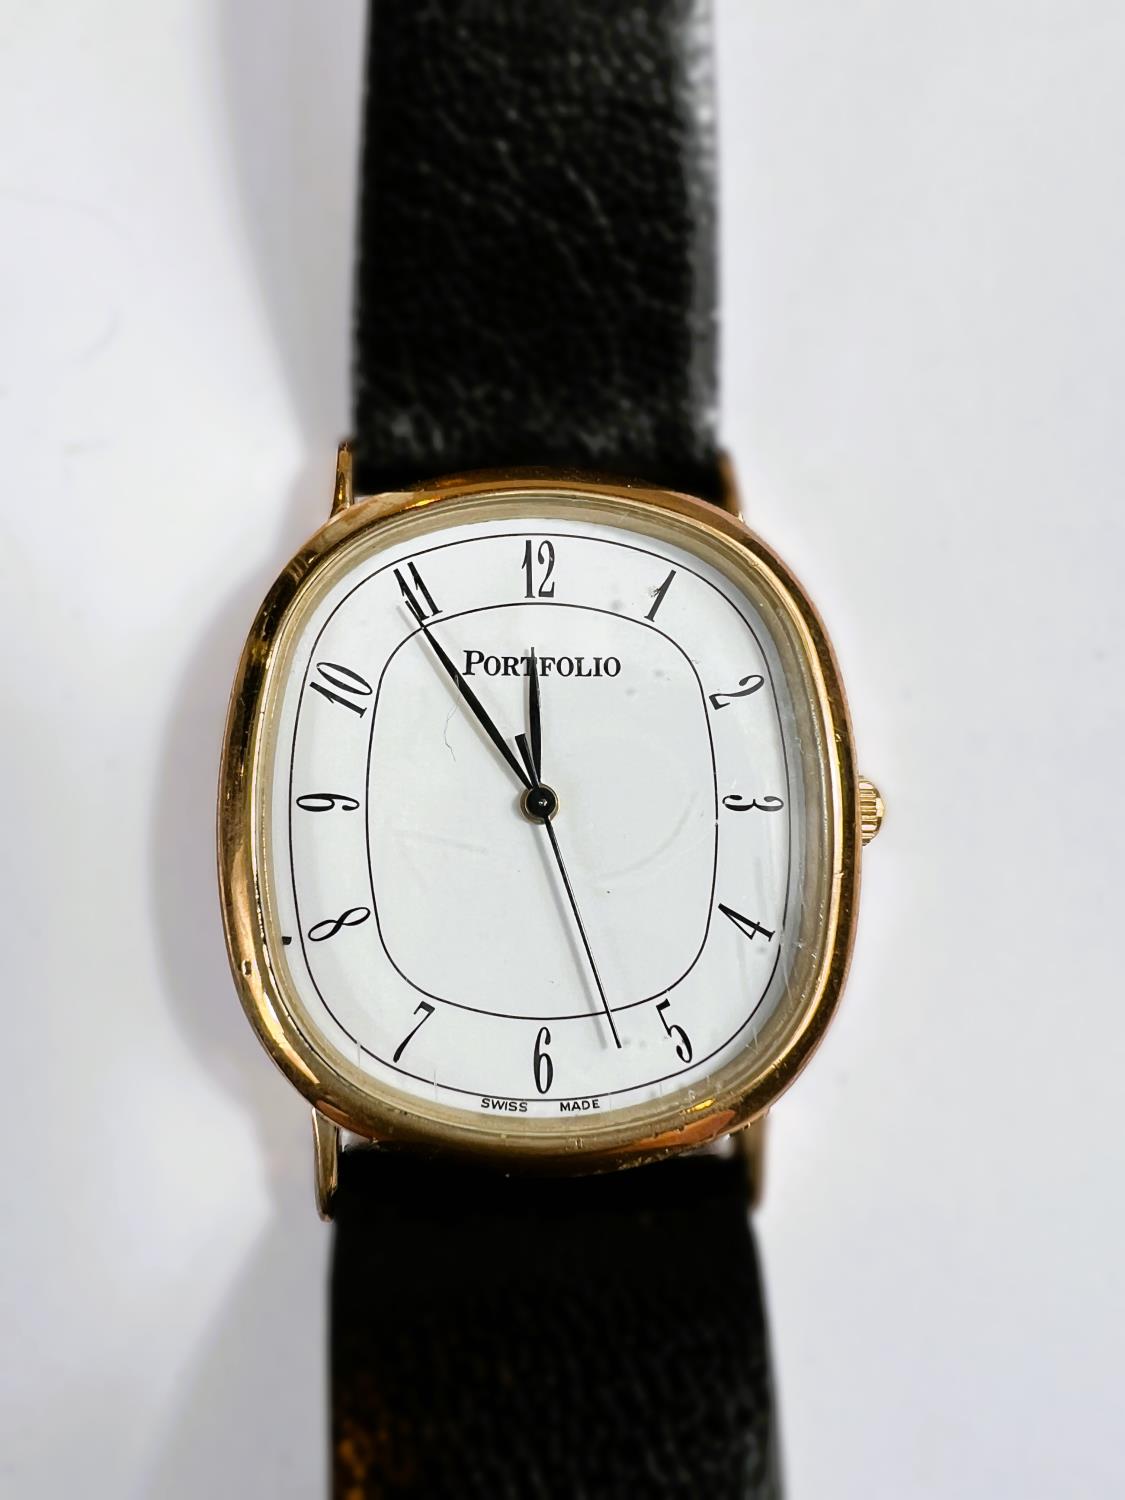 A Tiffany & Co 'Portfolio' gents quartz watch c. 1990's on leather strap - Image 2 of 6